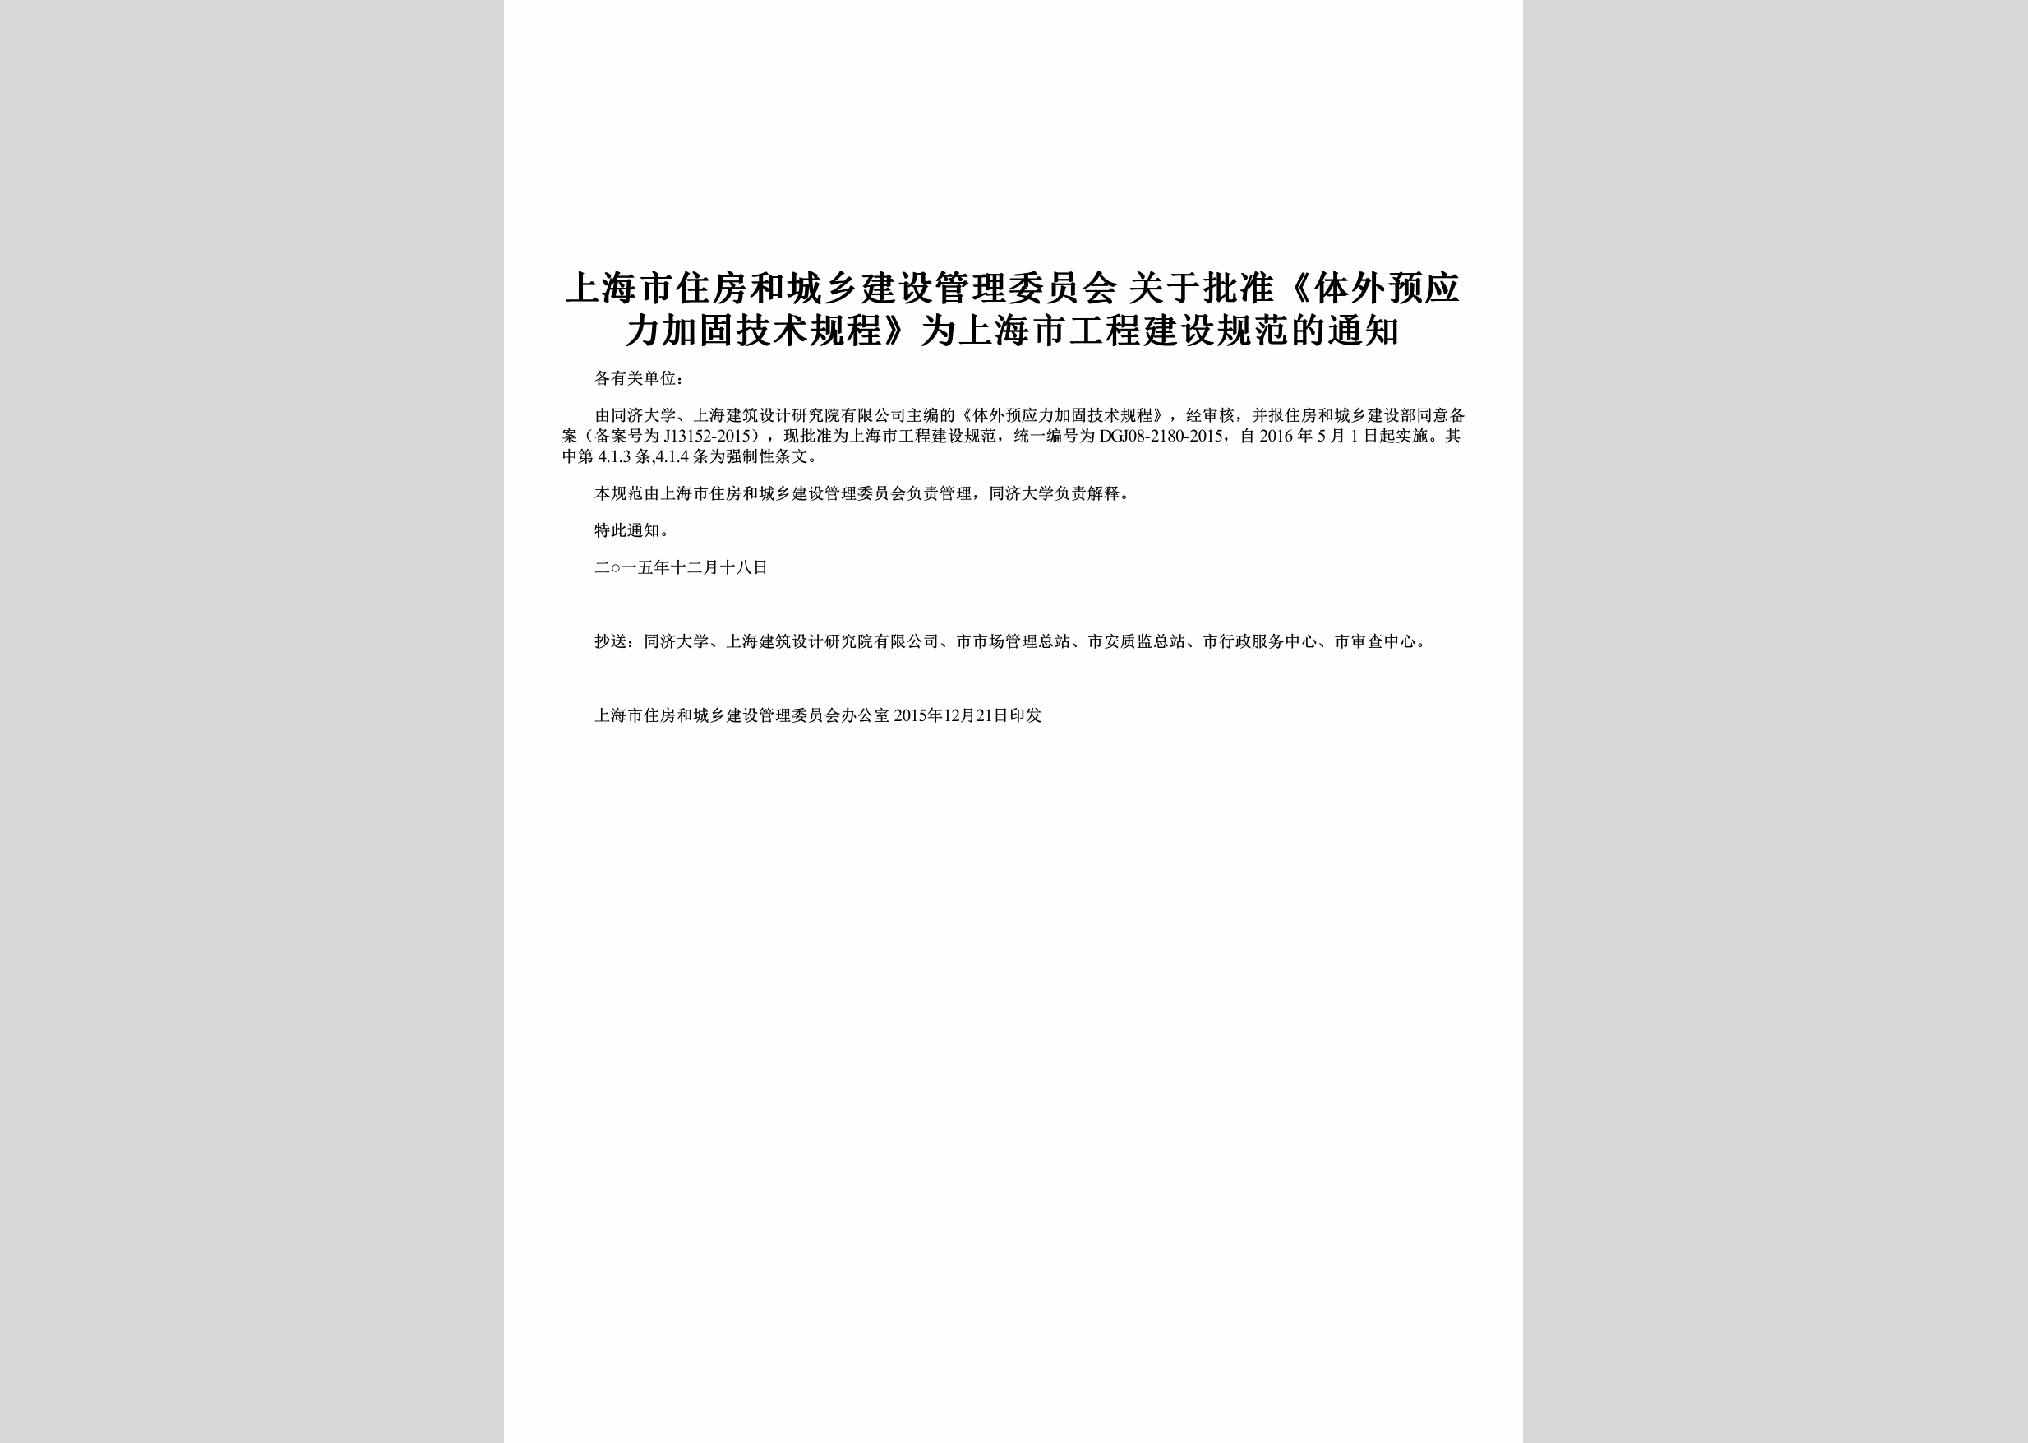 SH-JGJSGCTZ-2015：关于批准《体外预应力加固技术规程》为上海市工程建设规范的通知